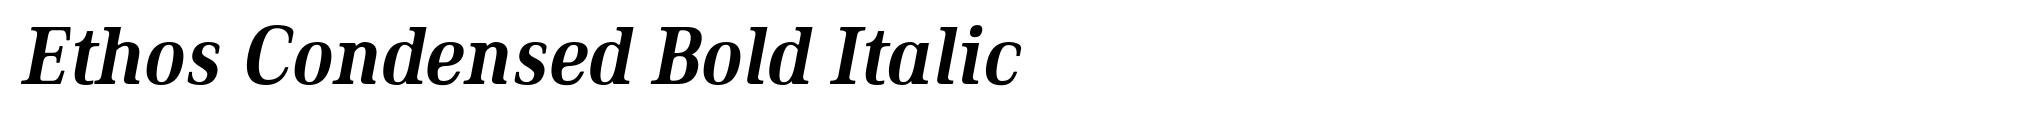 Ethos Condensed Bold Italic image